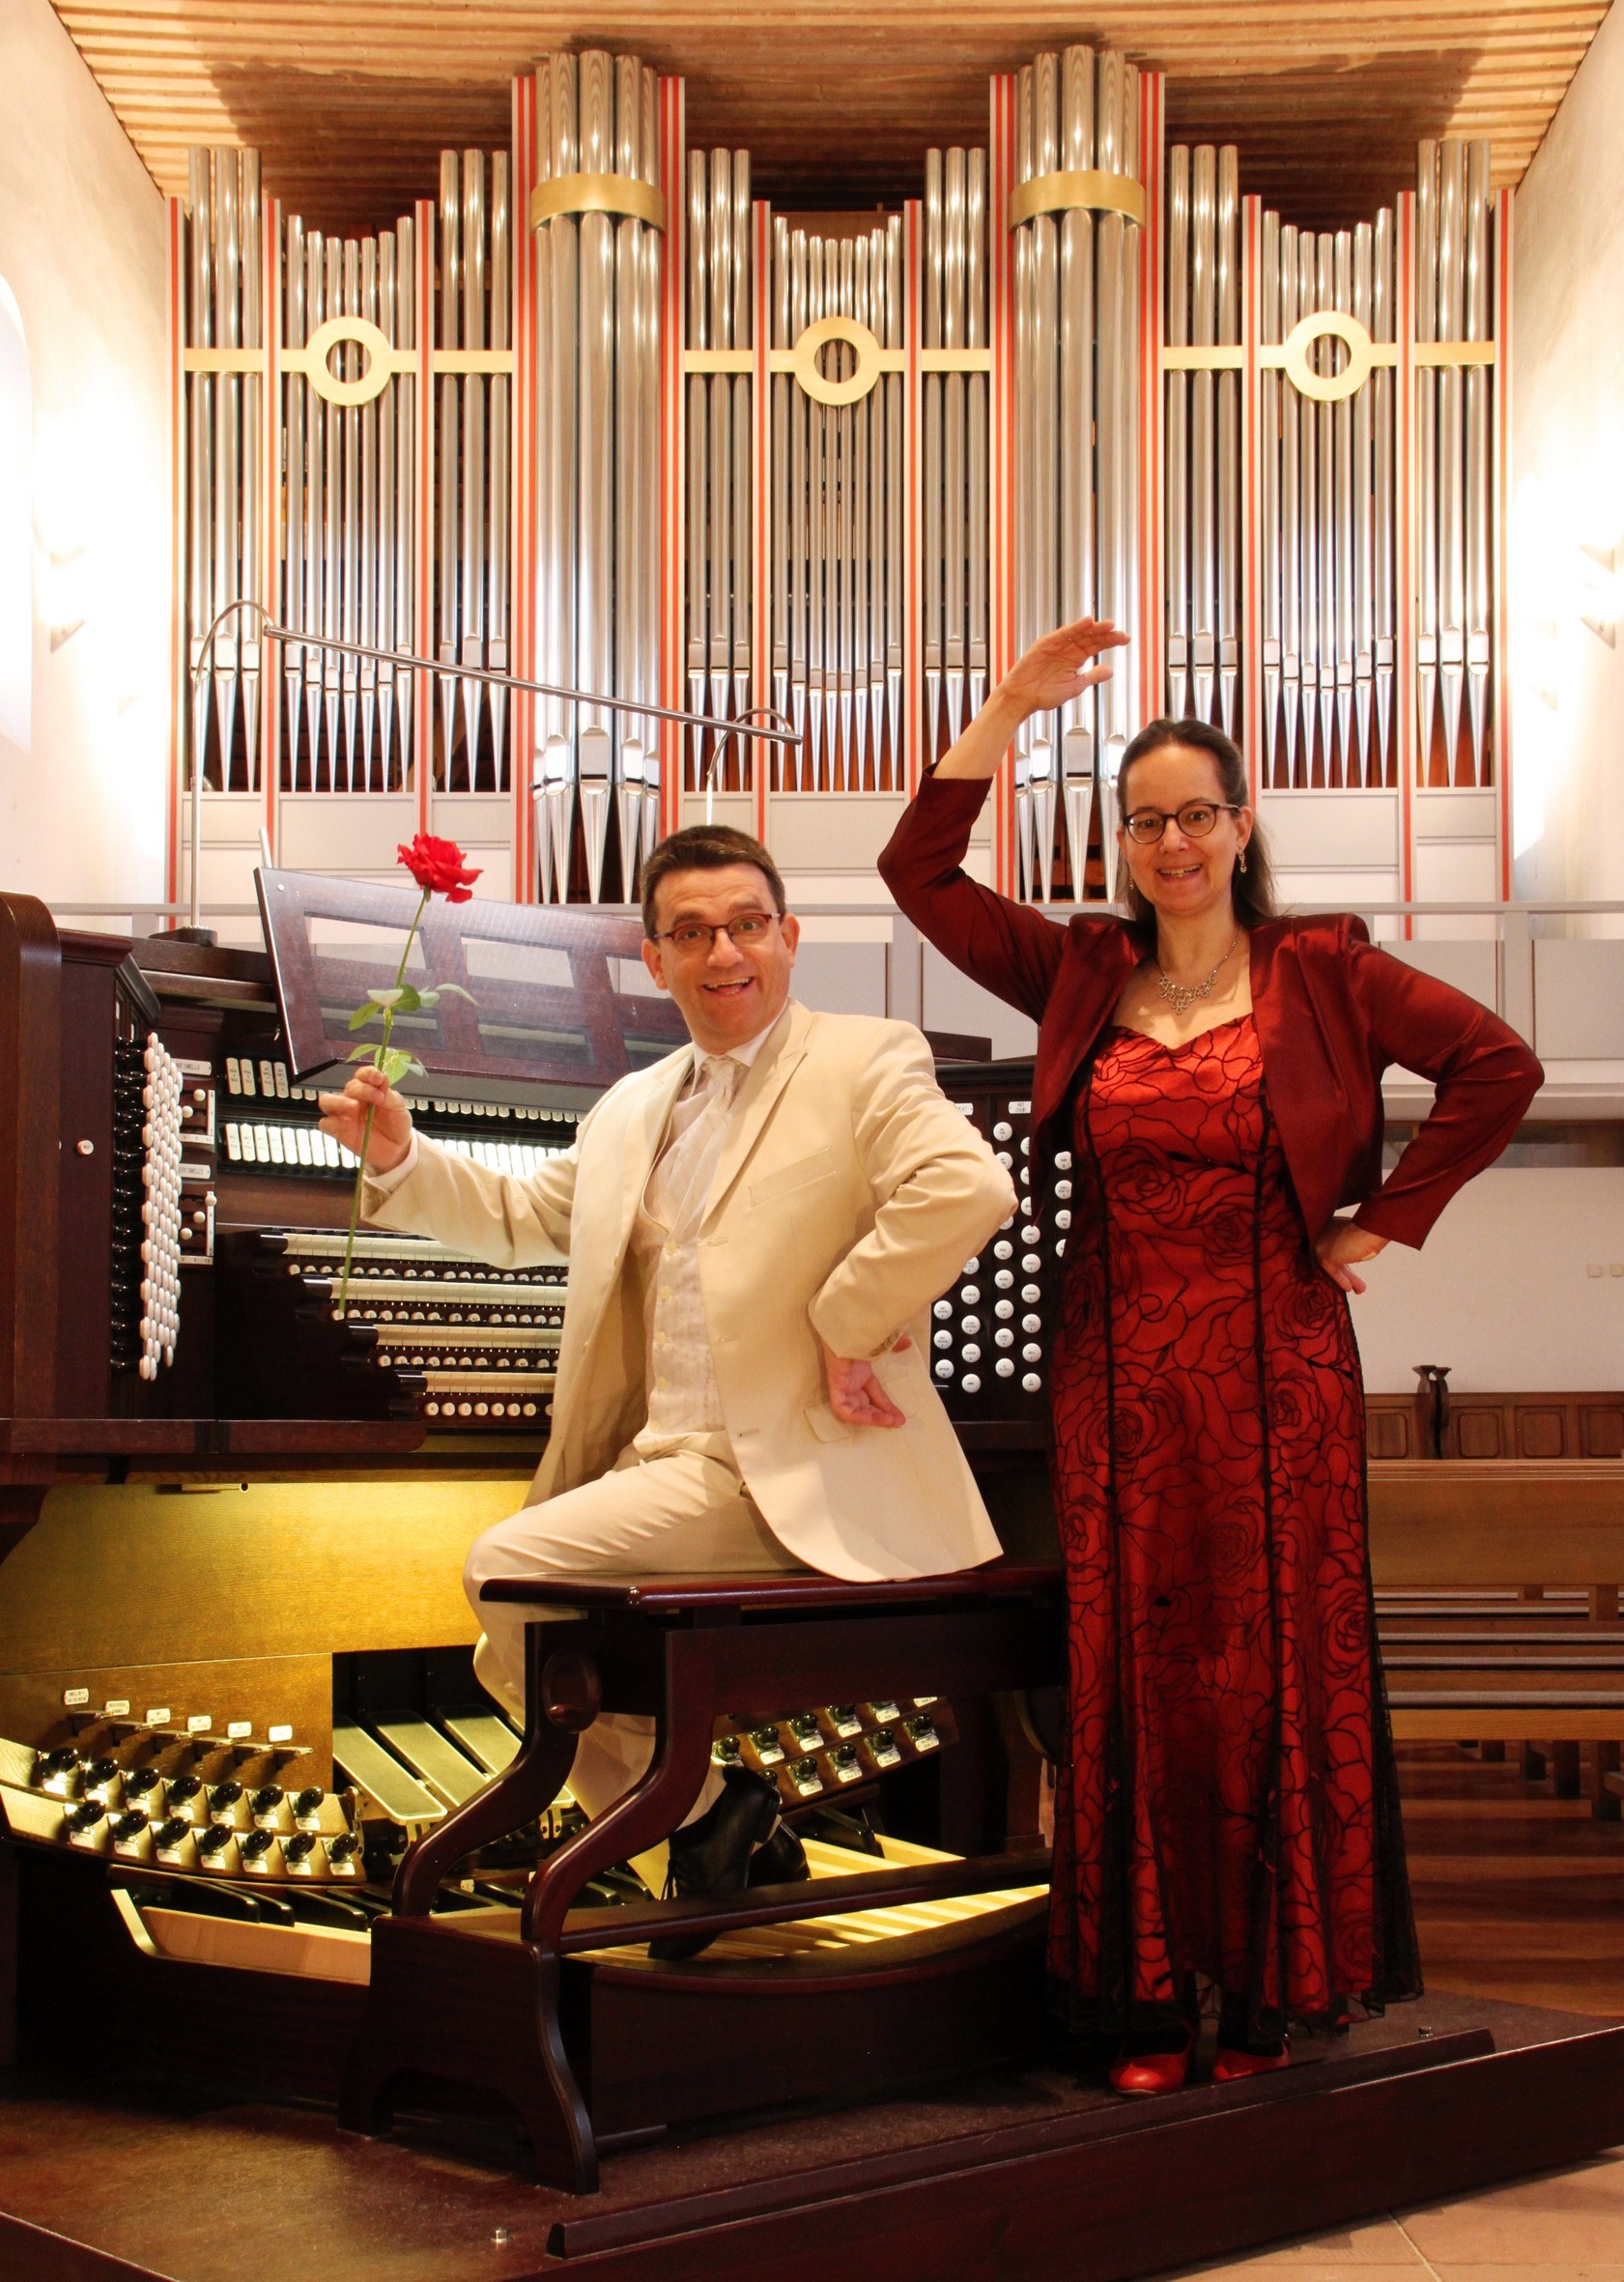 Orgel-Duo Lenz - Die Orgel tanzt  © Carsten Lenz